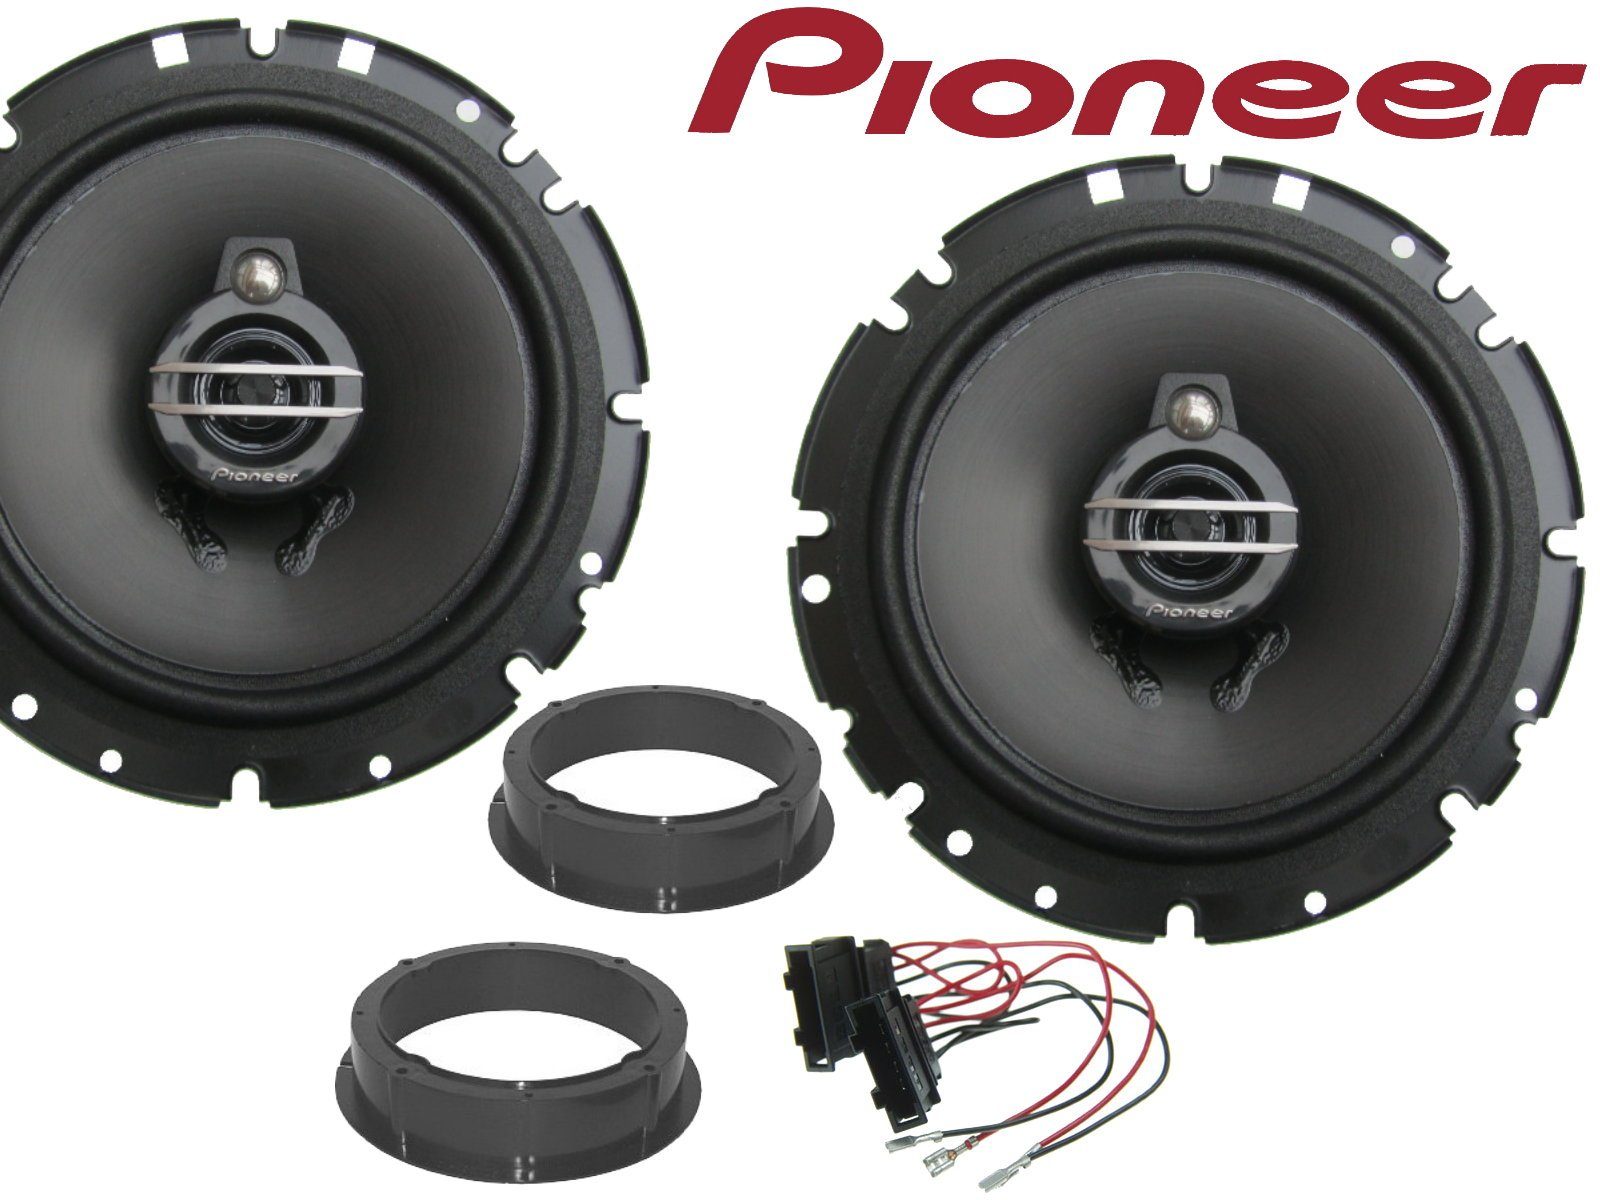 DSX Pioneer 3Wege passend für Skoda Citigo Bj 11-20 L Auto-Lautsprecher (40 W)